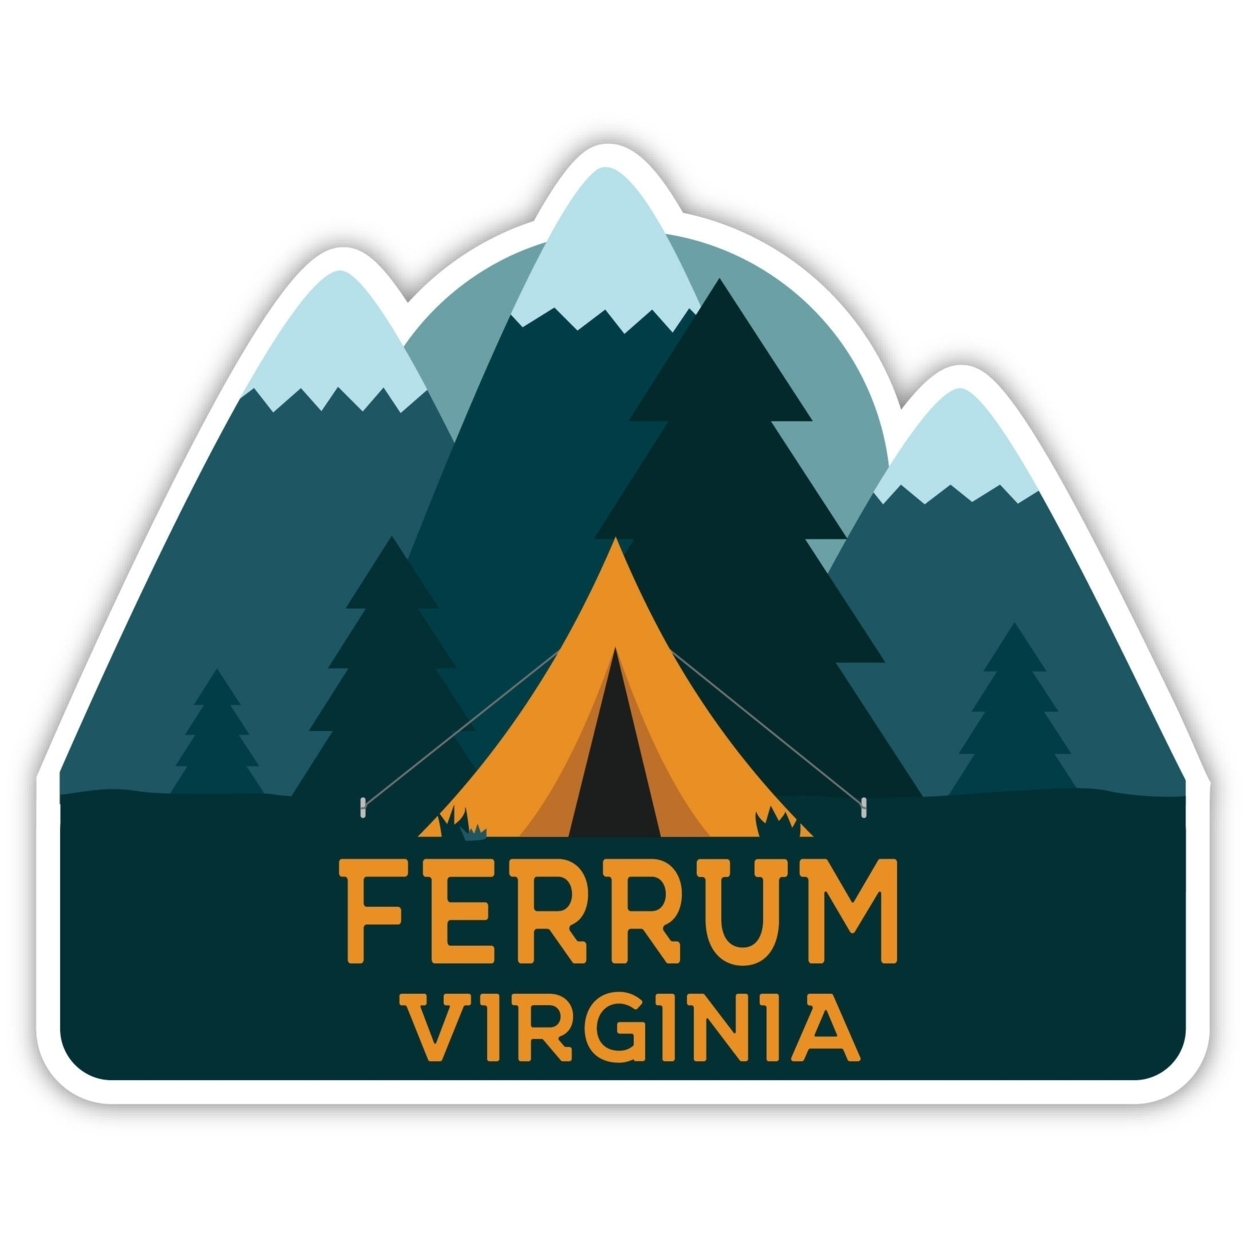 Ferrum Virginia Souvenir Decorative Stickers (Choose Theme And Size) - 4-Pack, 6-Inch, Tent